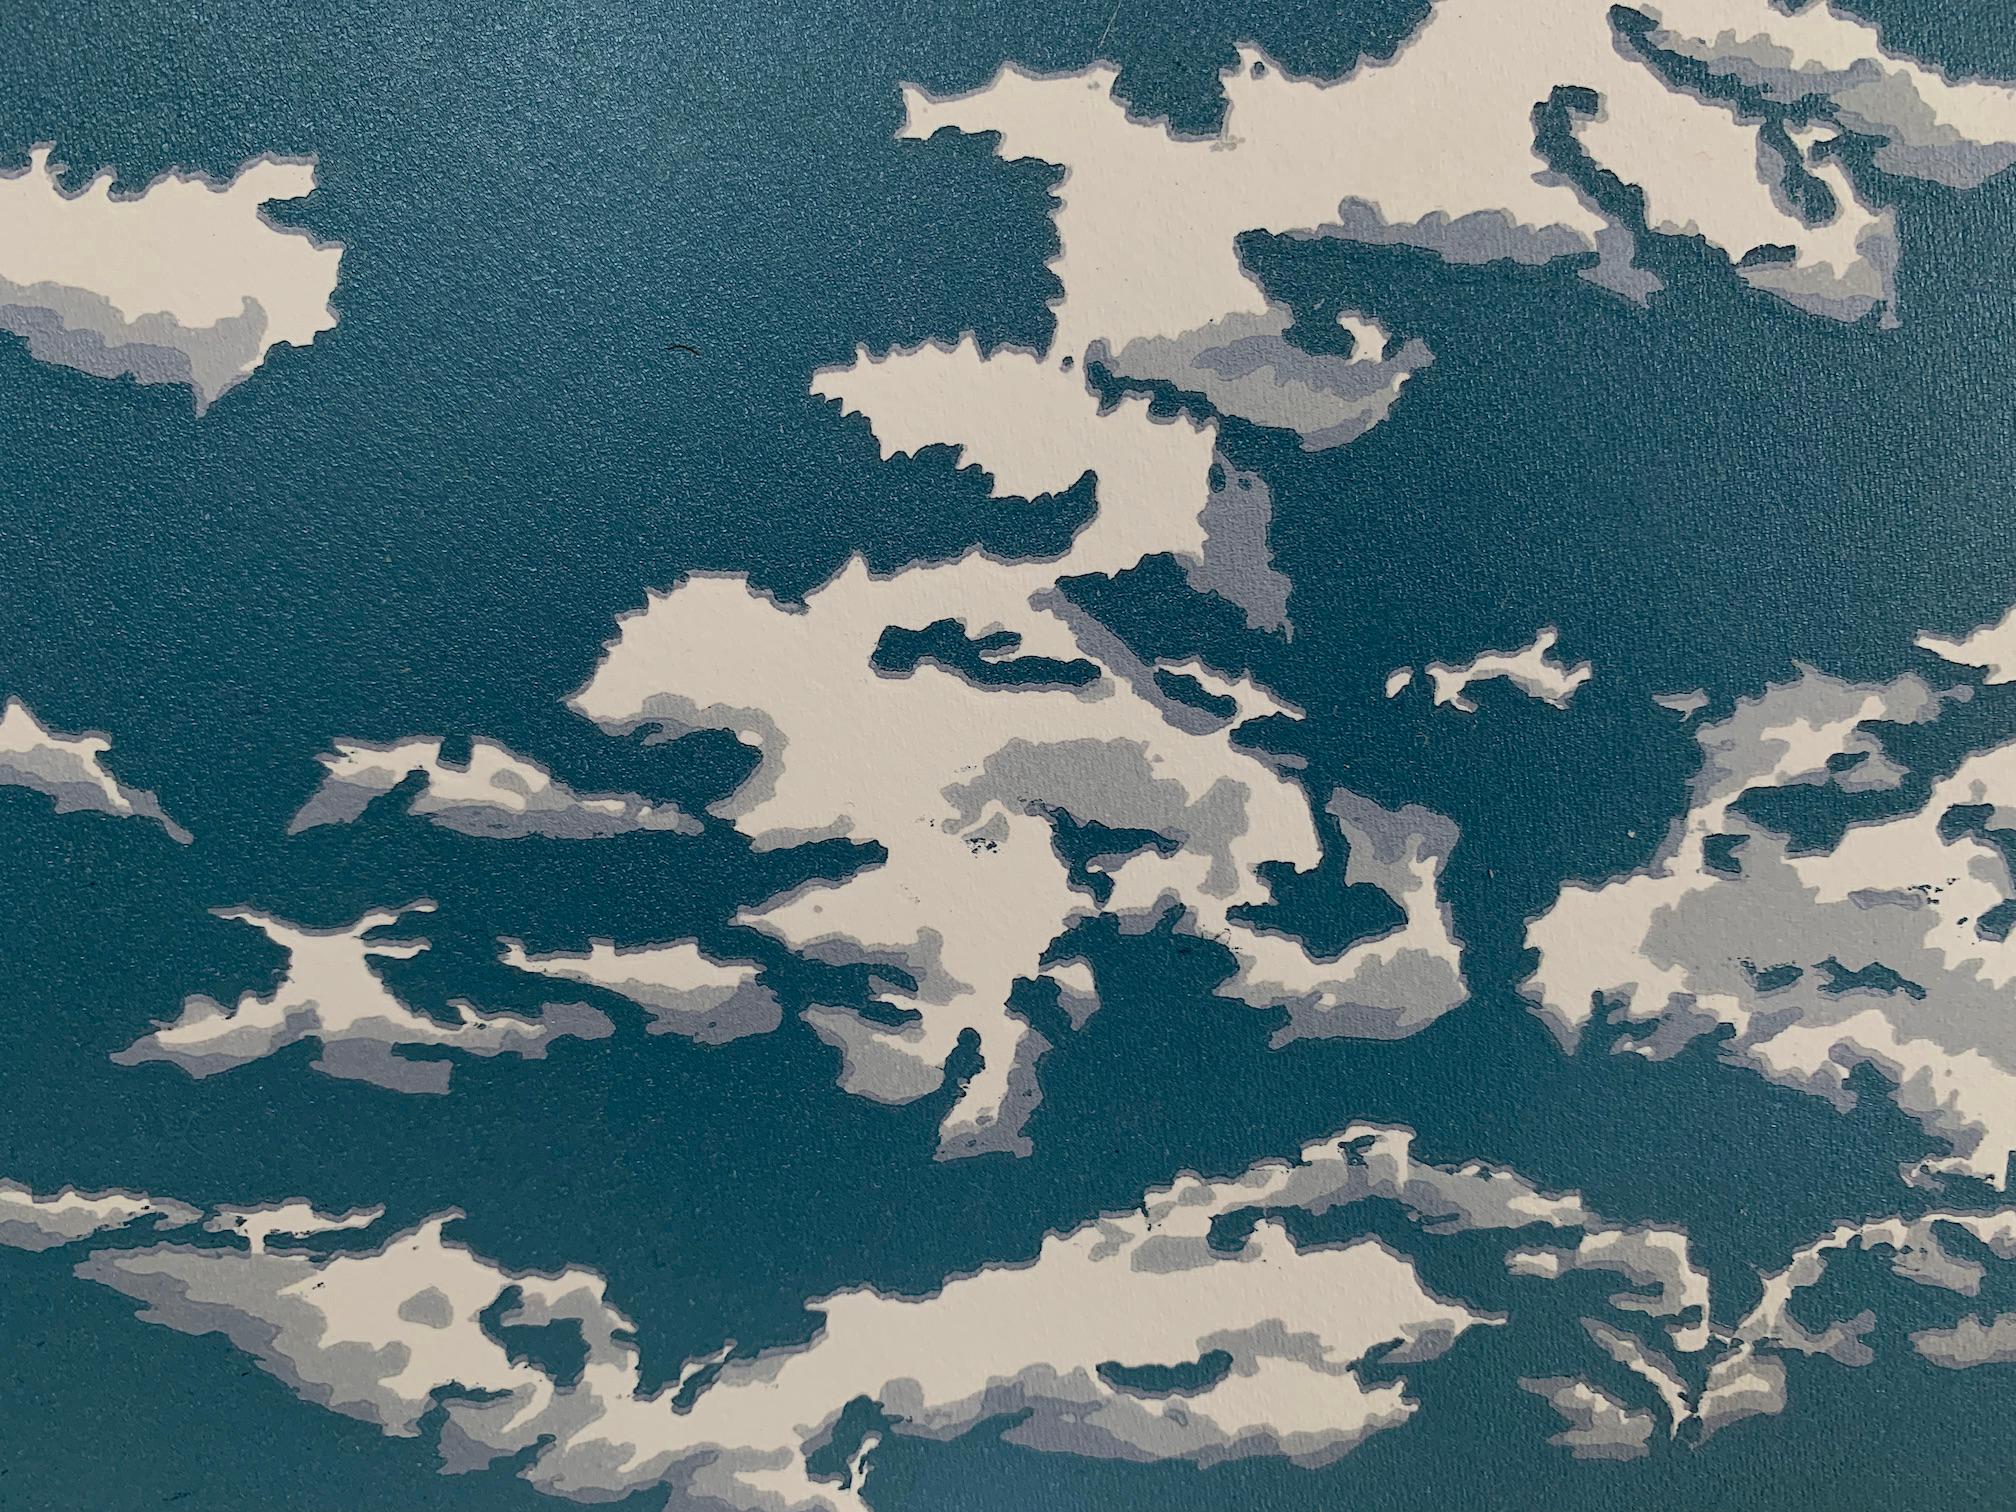 Skies know no borders  - Blue Landscape Print by Jennifer Jokhoo